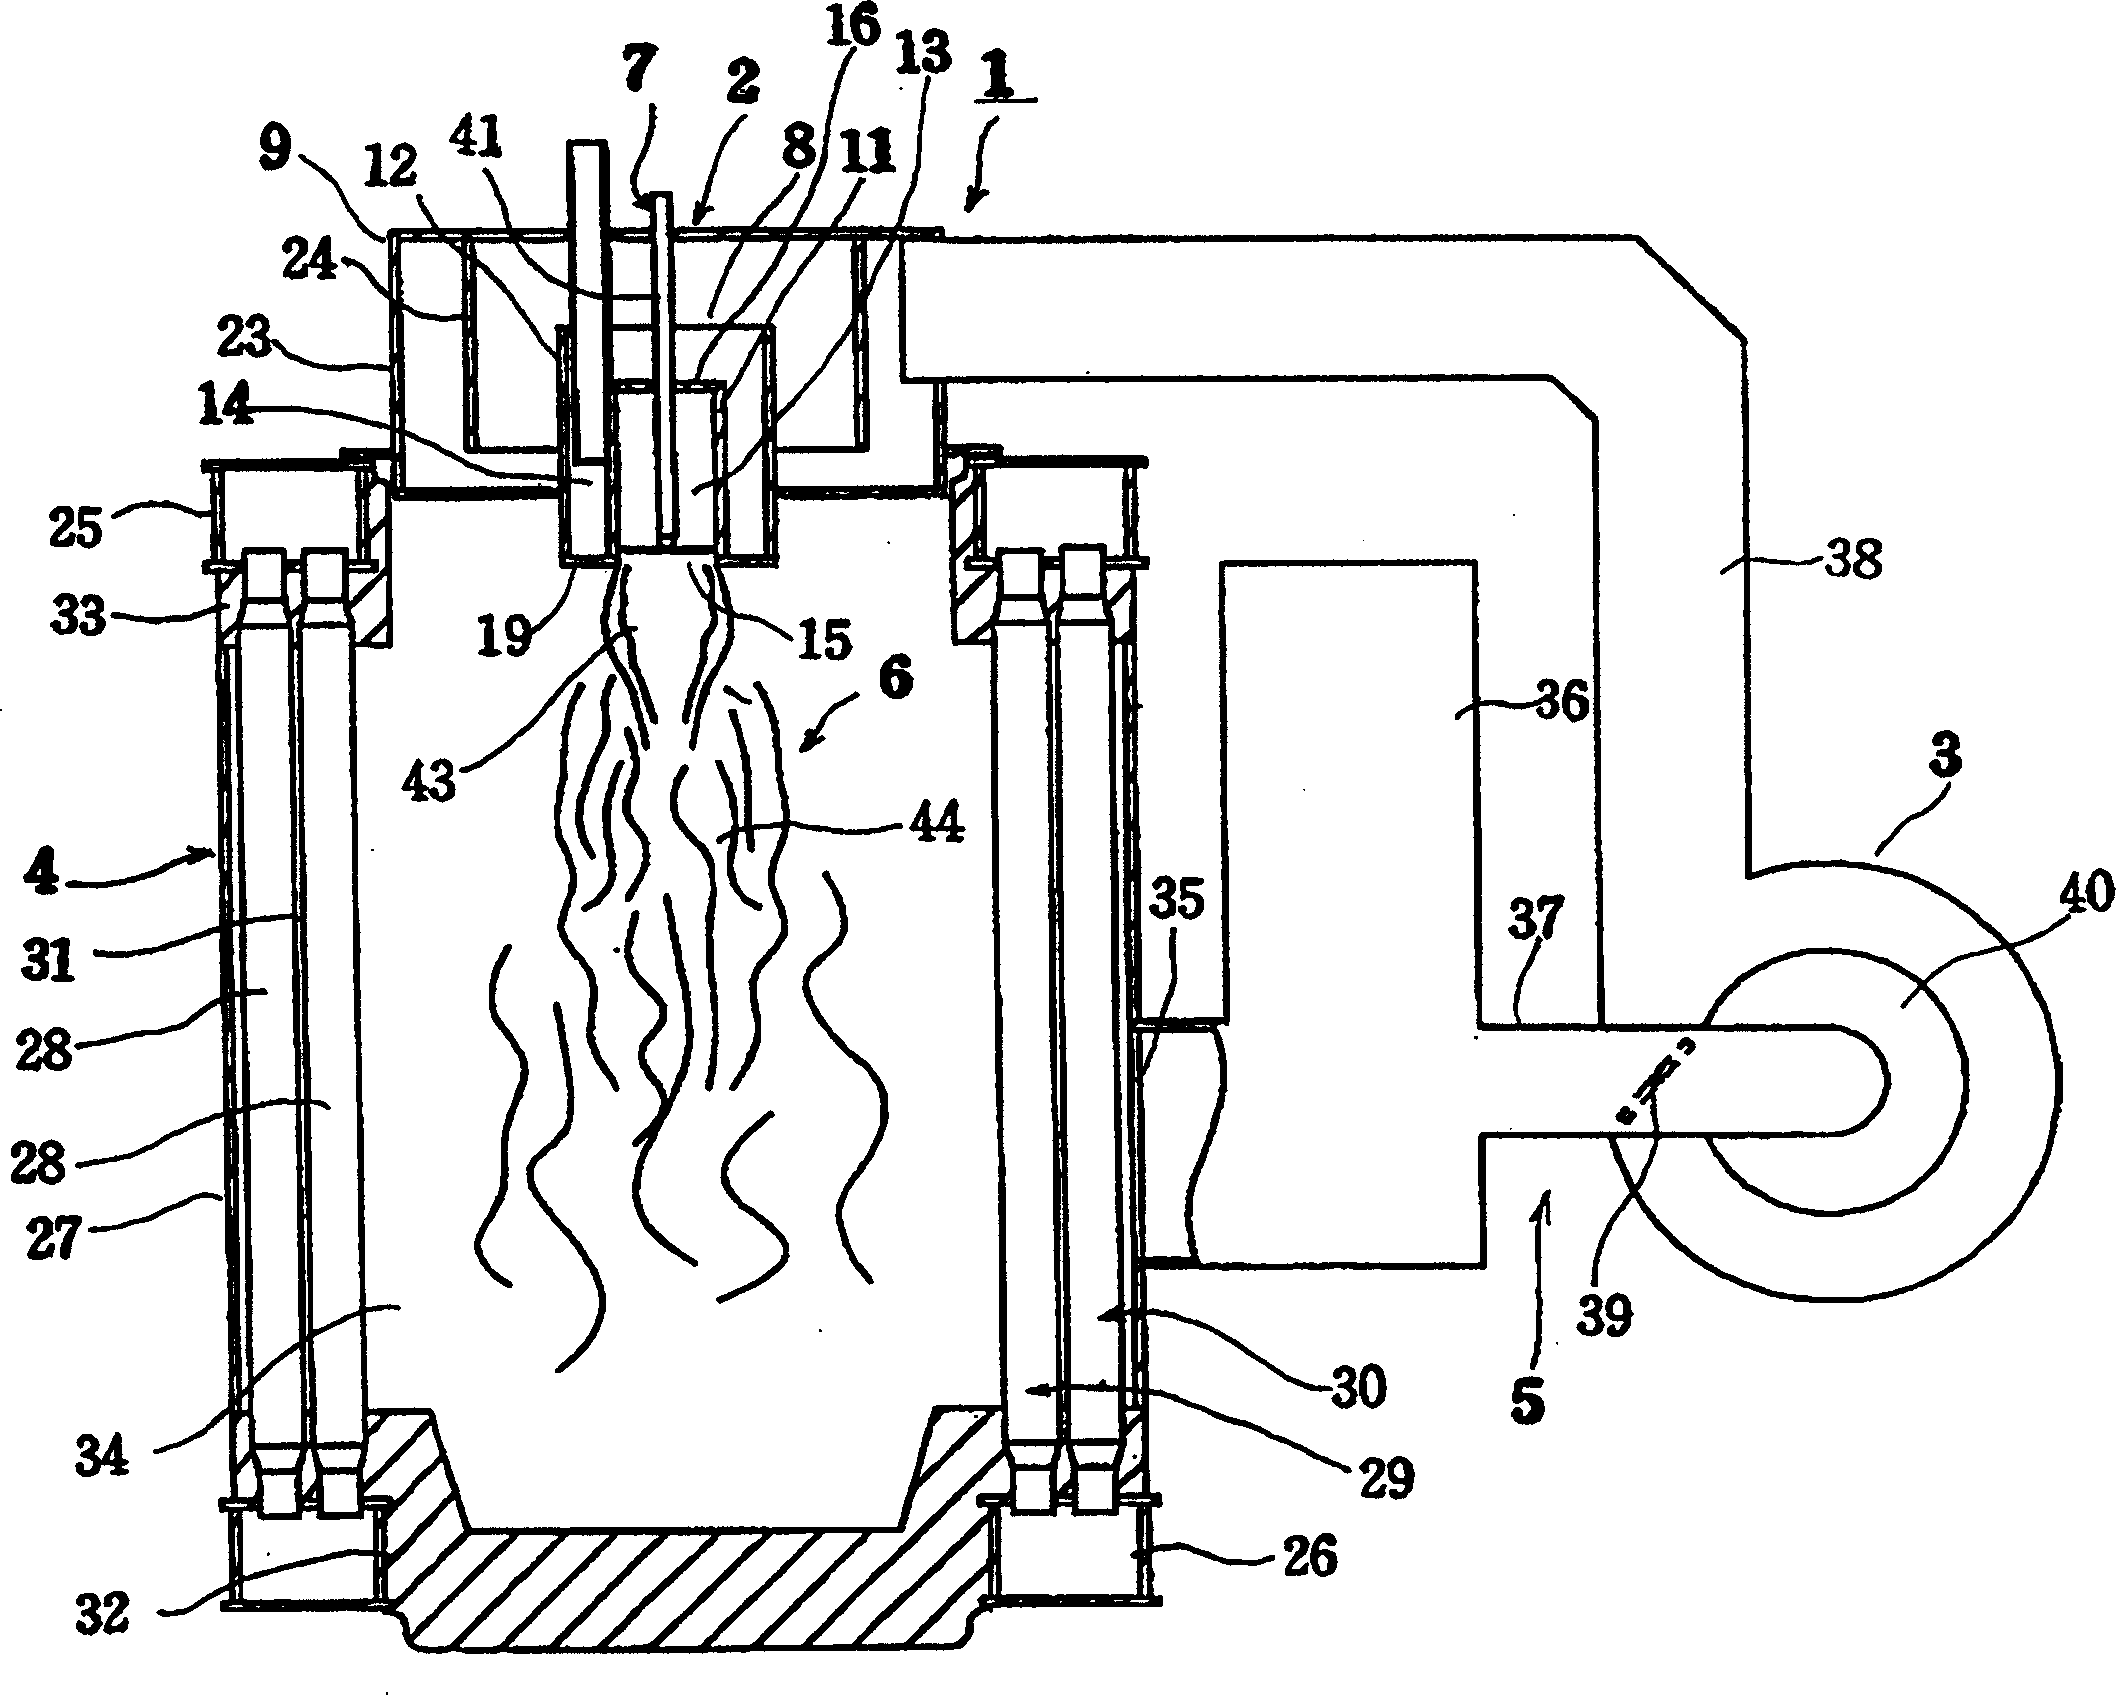 NOx-reduced burning method and apparatus